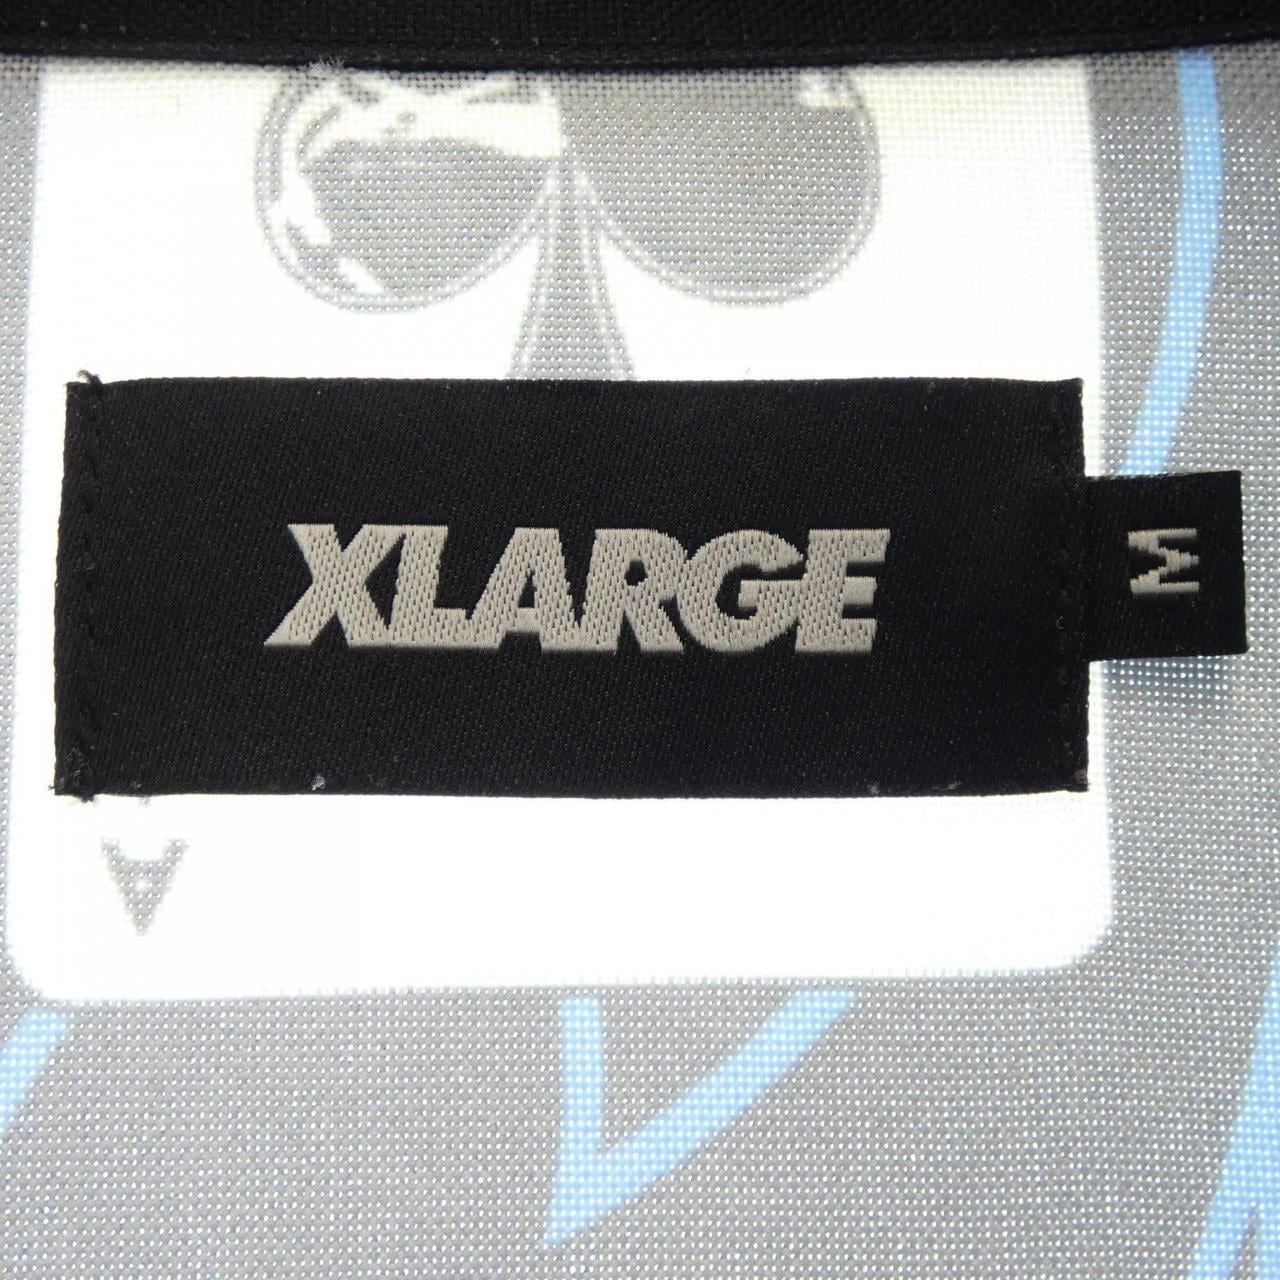 X-LARGE shirt